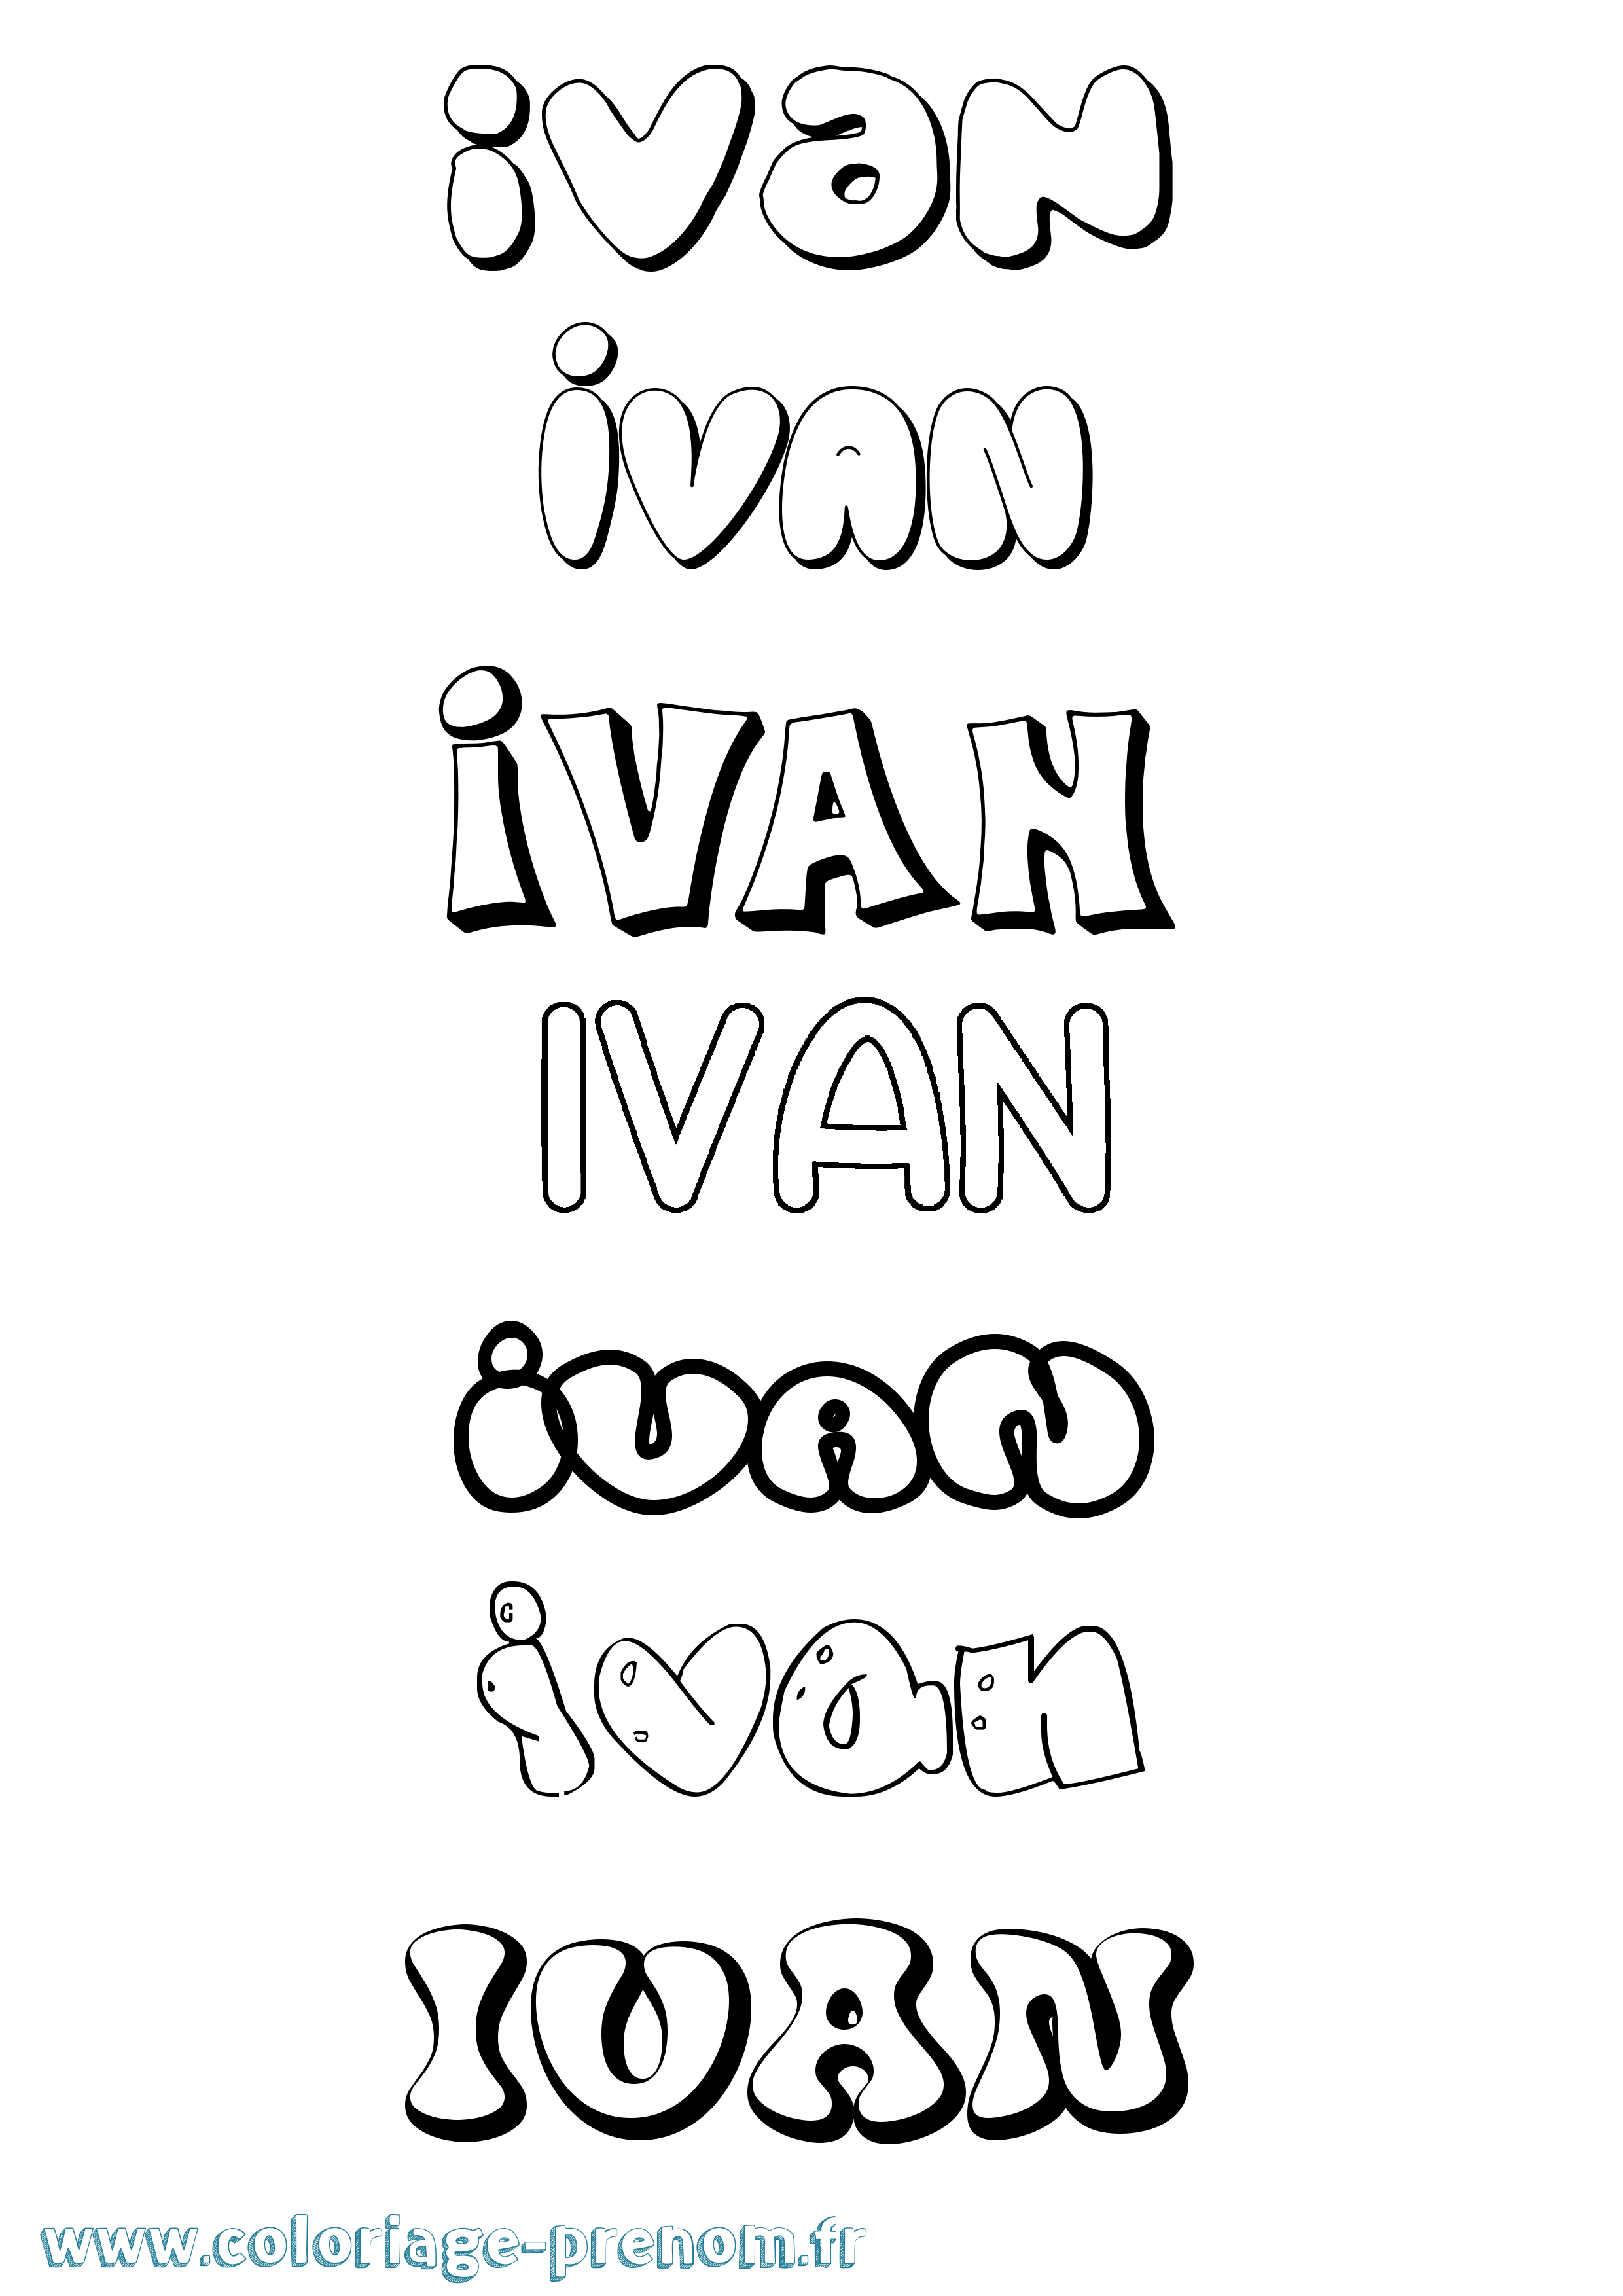 Coloriage prénom Ivan